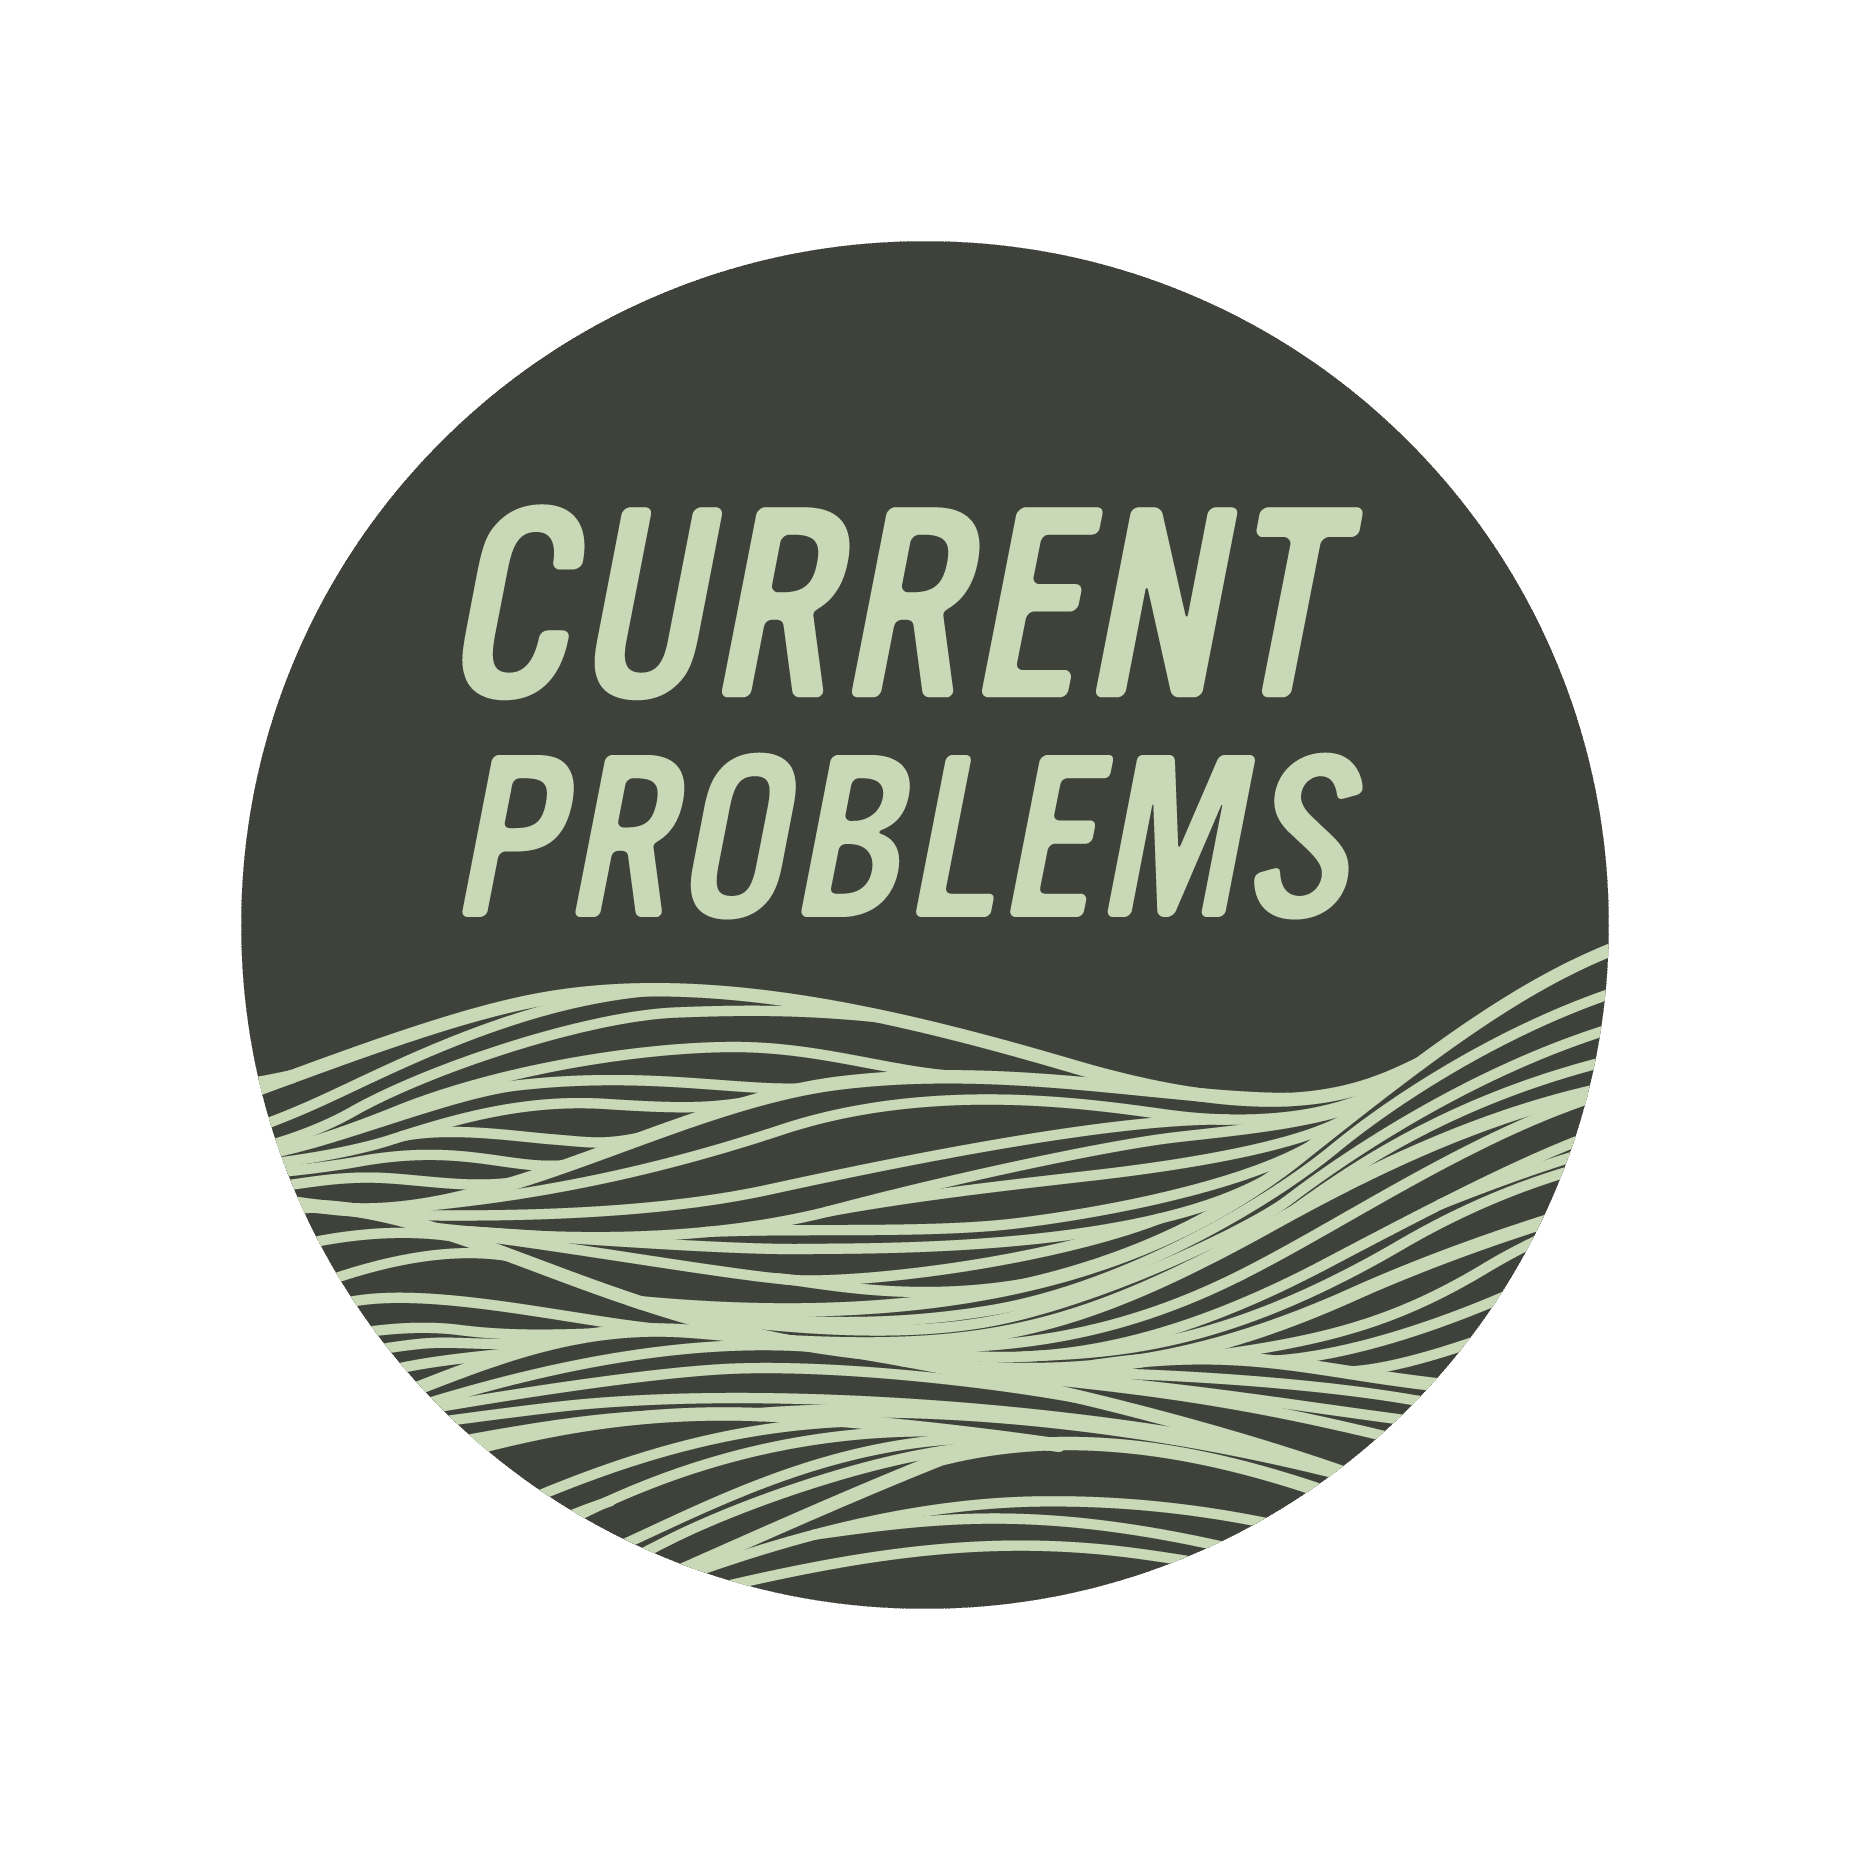 CURRENT PROBLEMS